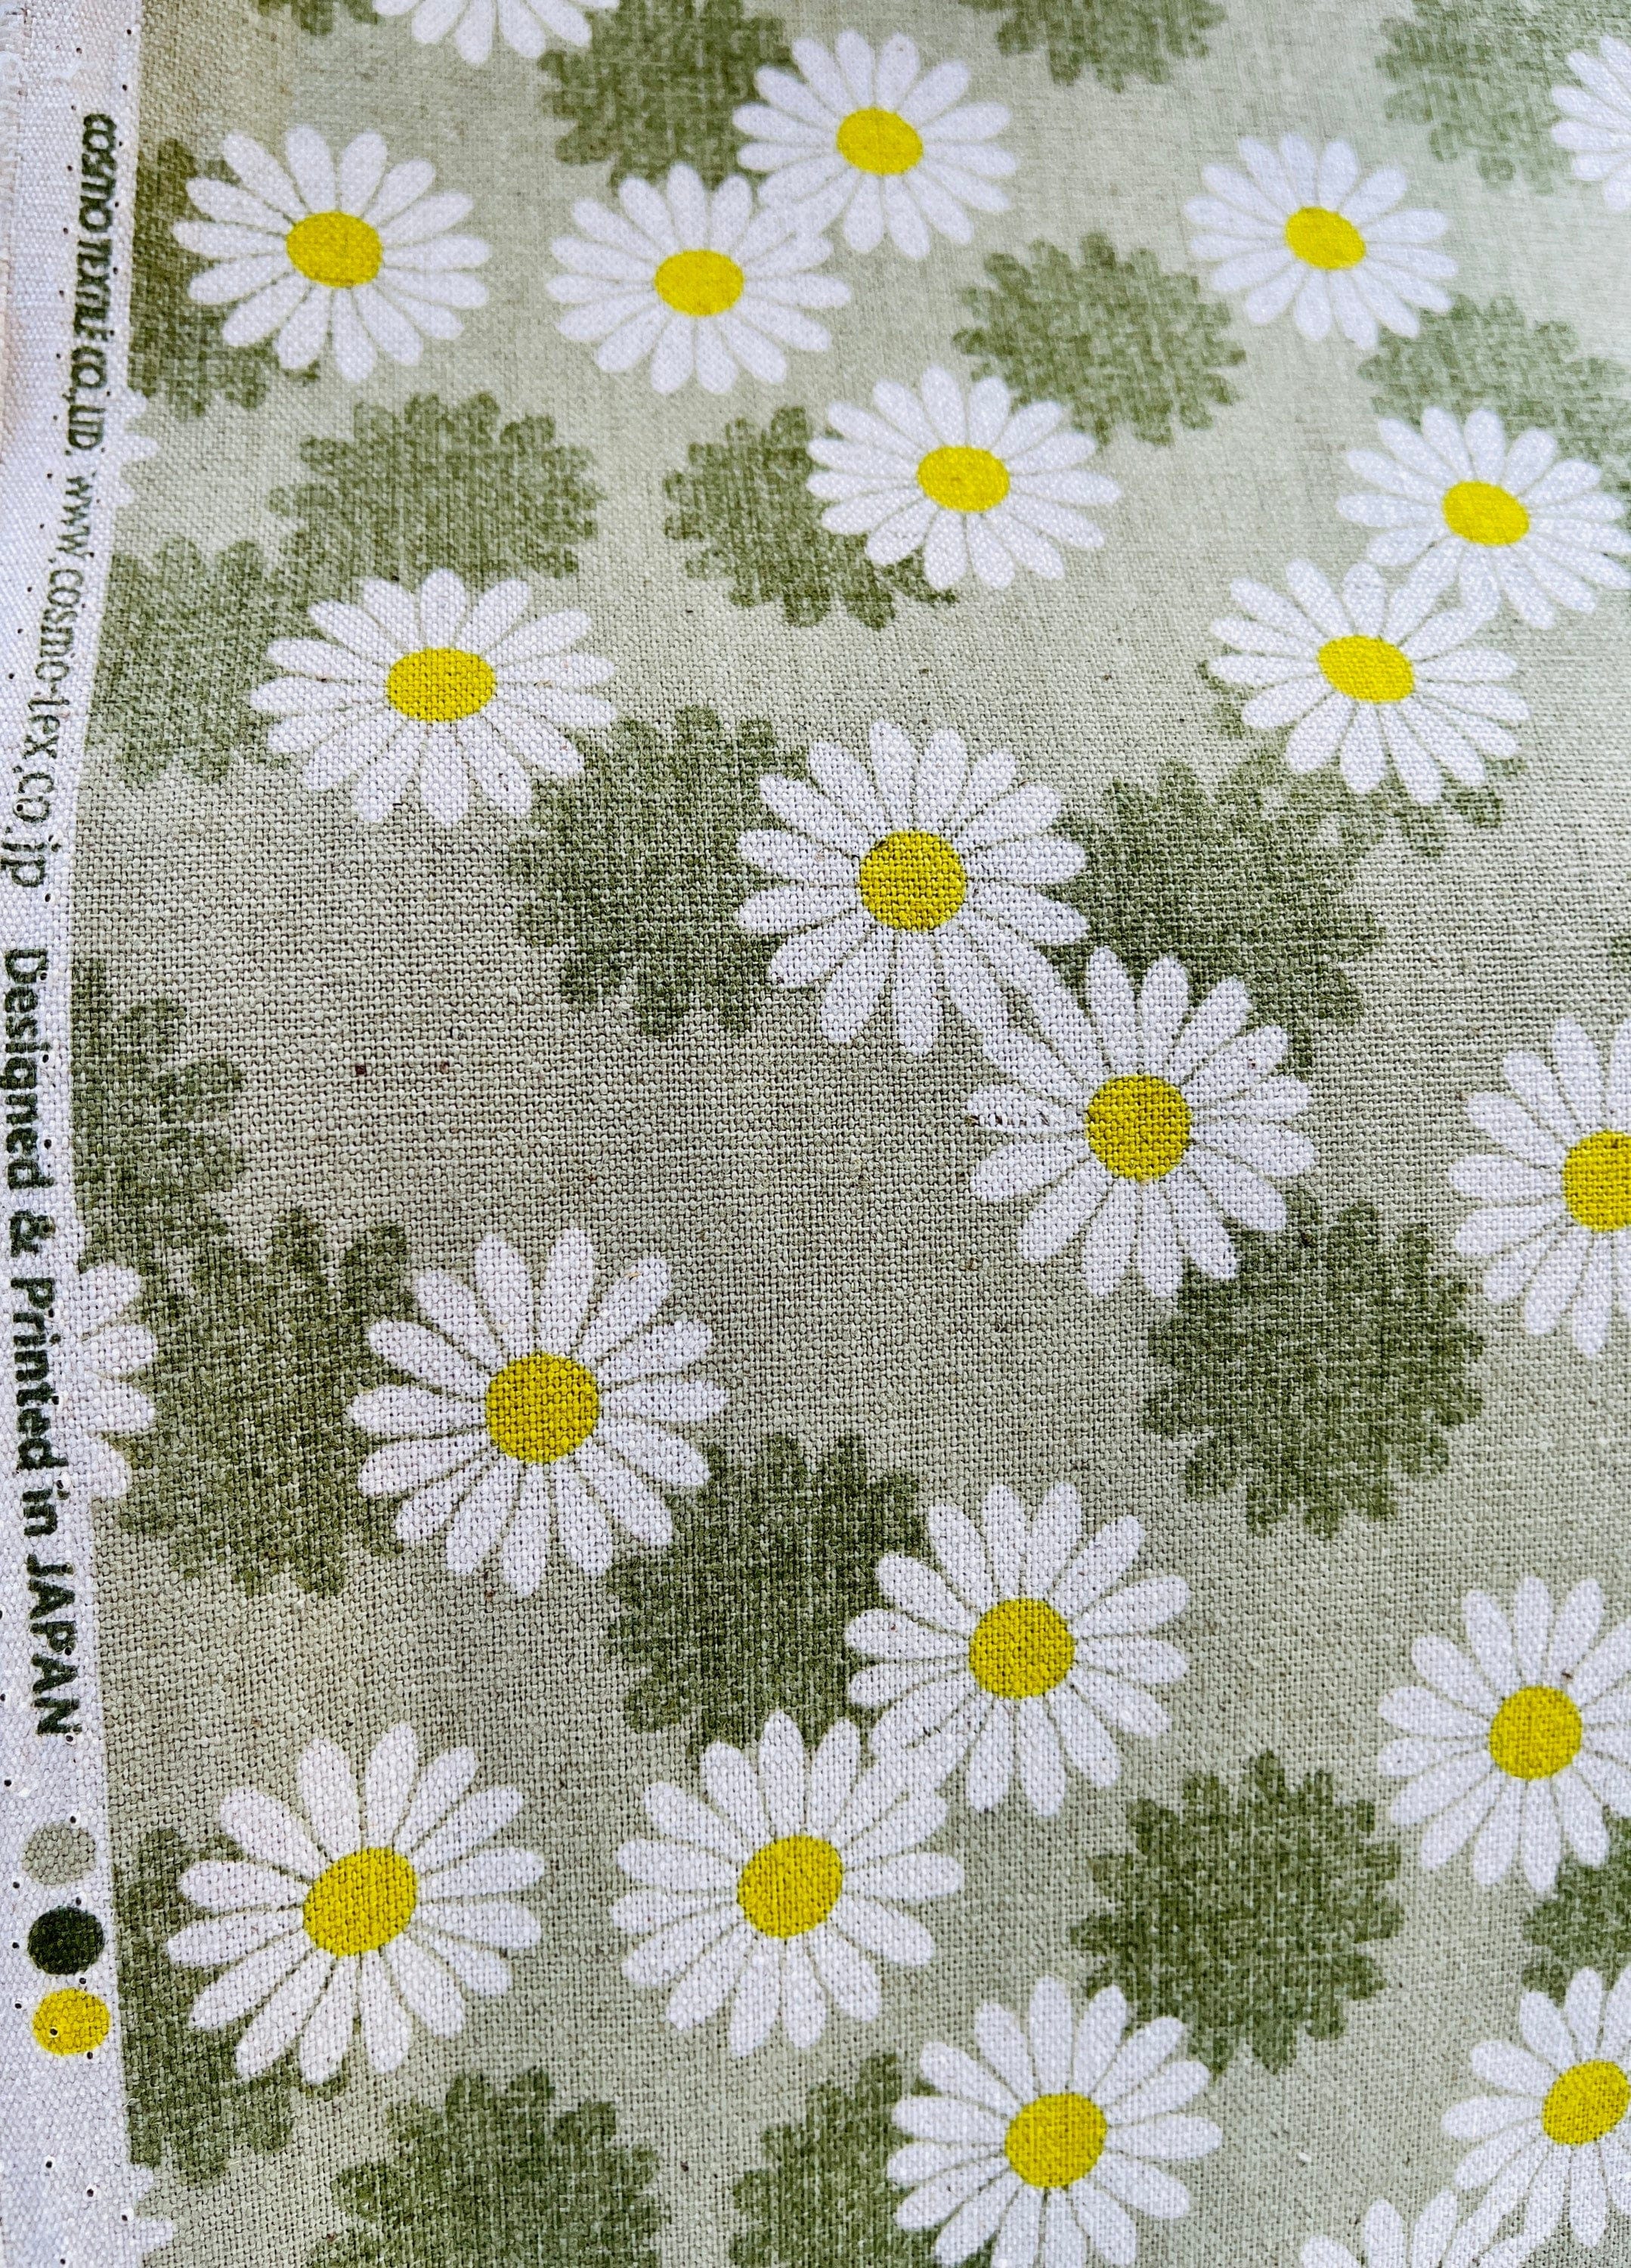 Daisy - Daisy Canvas - Cosmo - Japanese Textile - Cotton Linen Fabric - Printed Canvas - AP-21703-1C